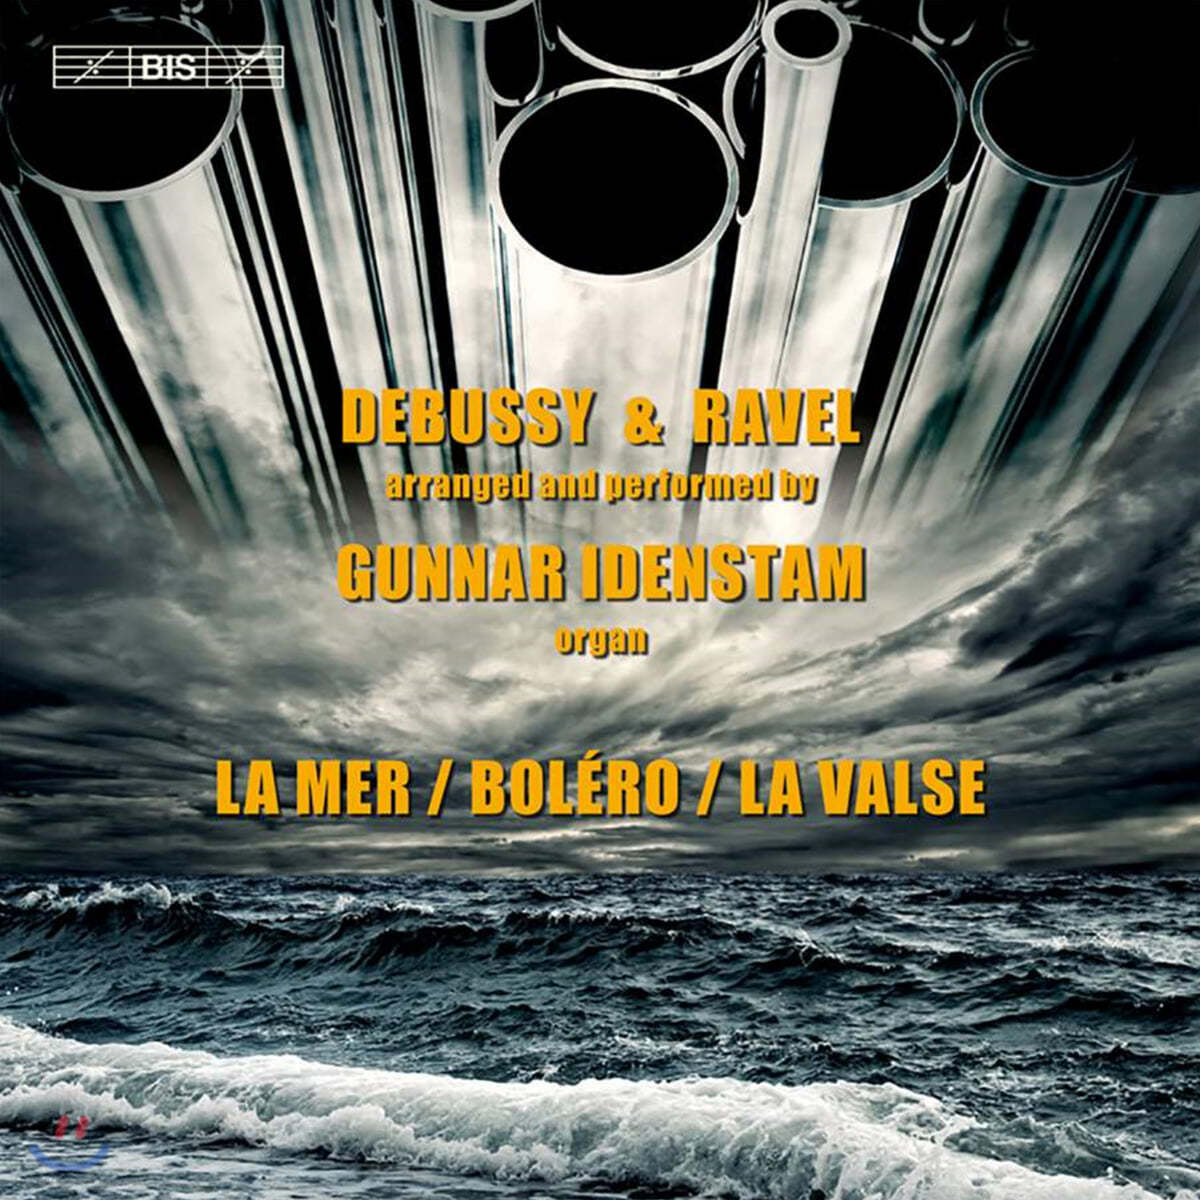 Gunnar Idenstam 드뷔시: 바다 / 라벨: 해돋이 (Debussy / Ravel on the Organ)